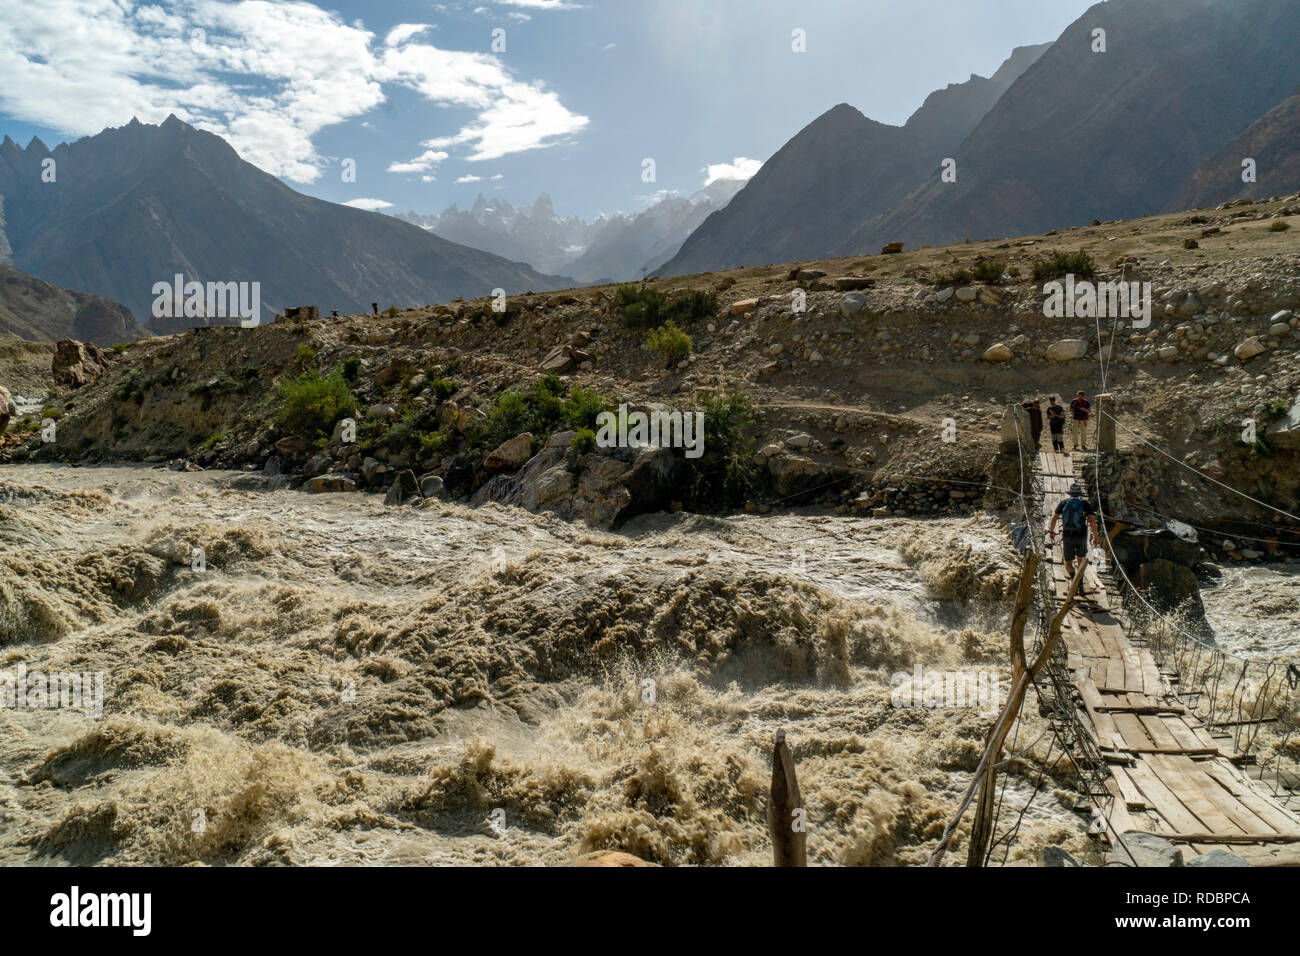 Karakoram, Pakistan - July 24, 2018: Adventurous river crossing on fragile bridge over a wild river in Karakoram Mountains in Pakistan. Illustrative e Stock Photo